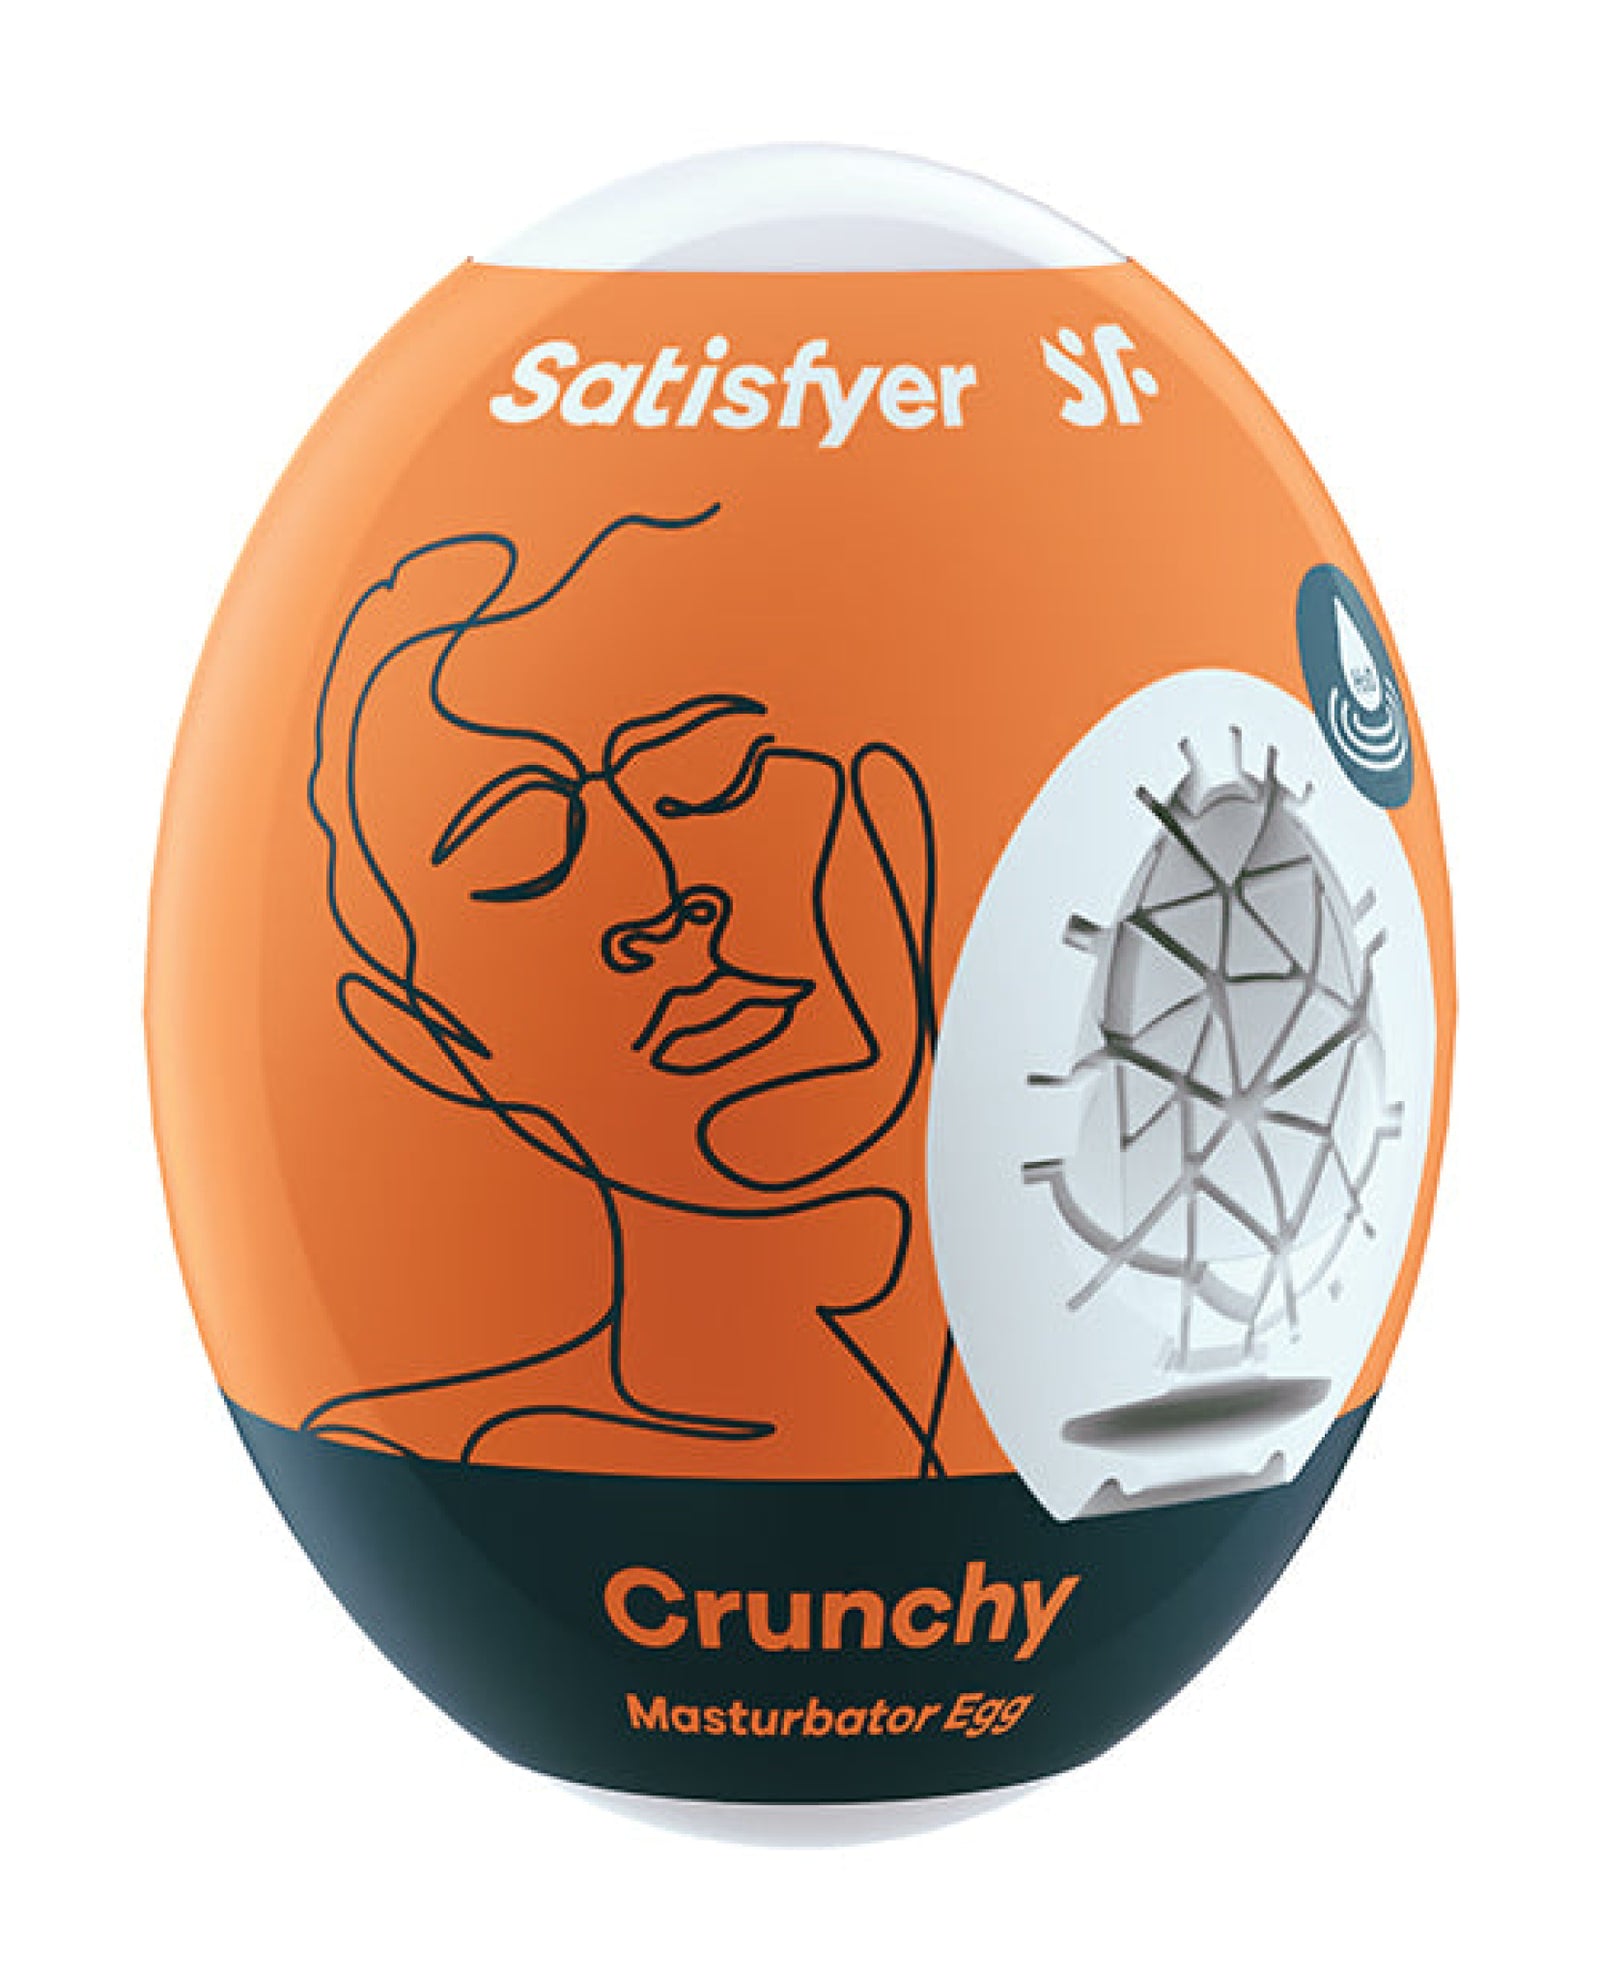 Satisfyer Masturbator Egg - Crunchy Satisfyer®